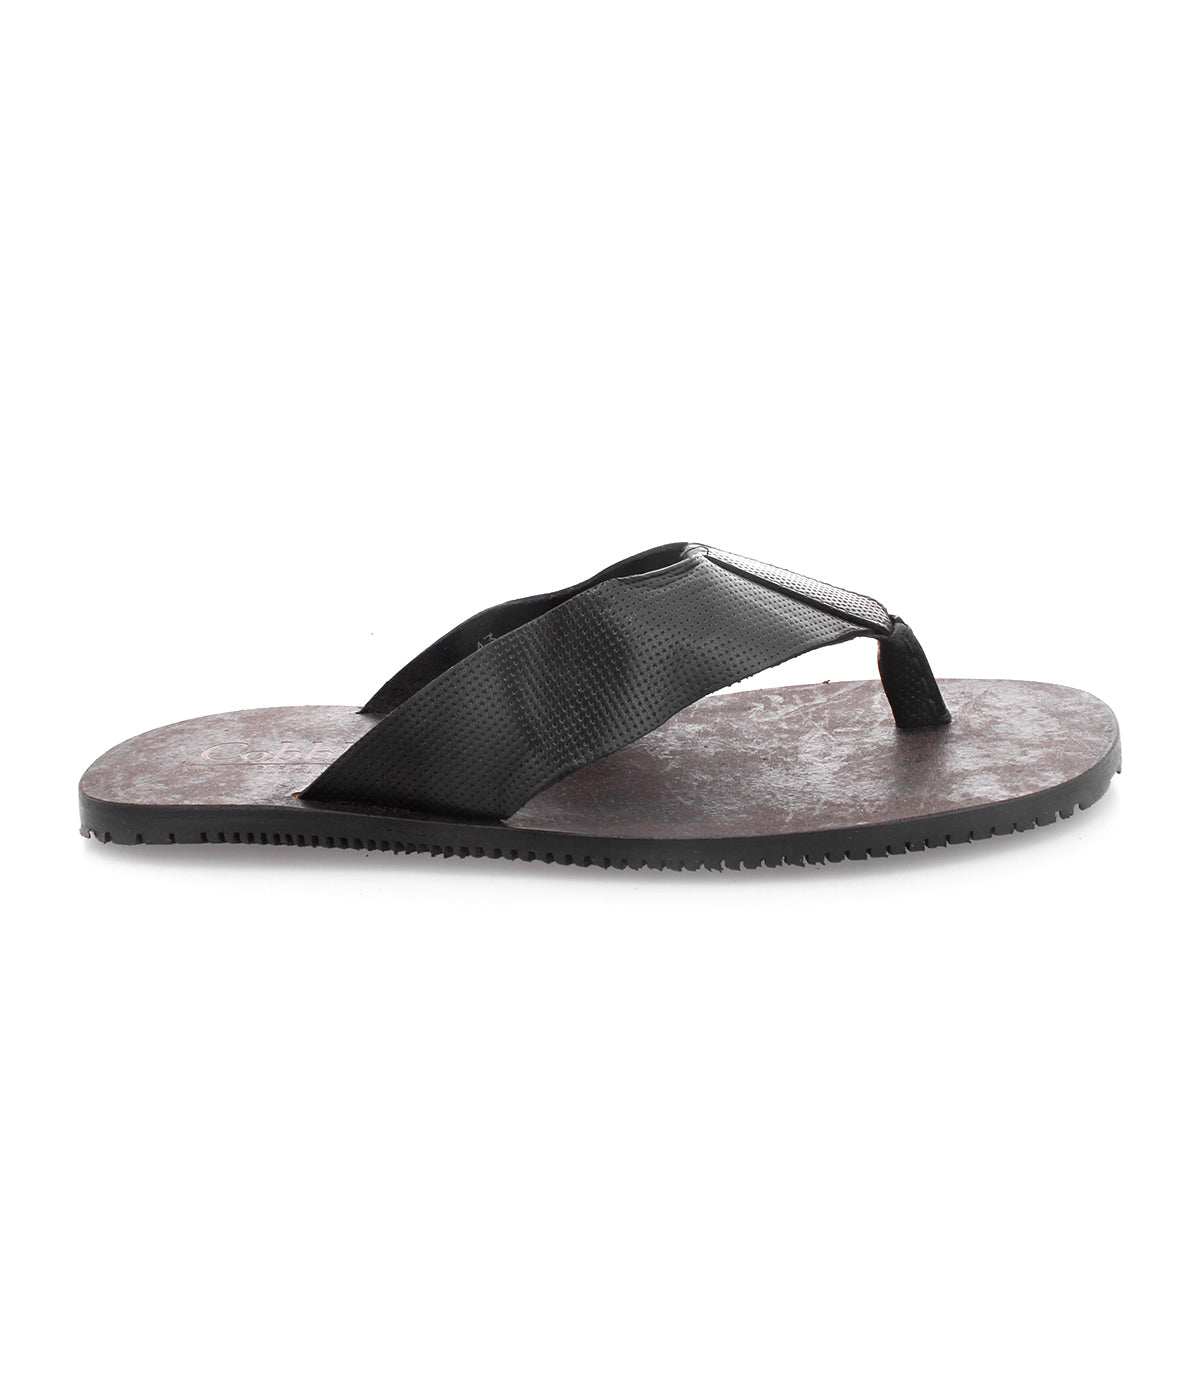 Bed Stu's Introduce men's black leather flip flop sandals offer comfort and durability.